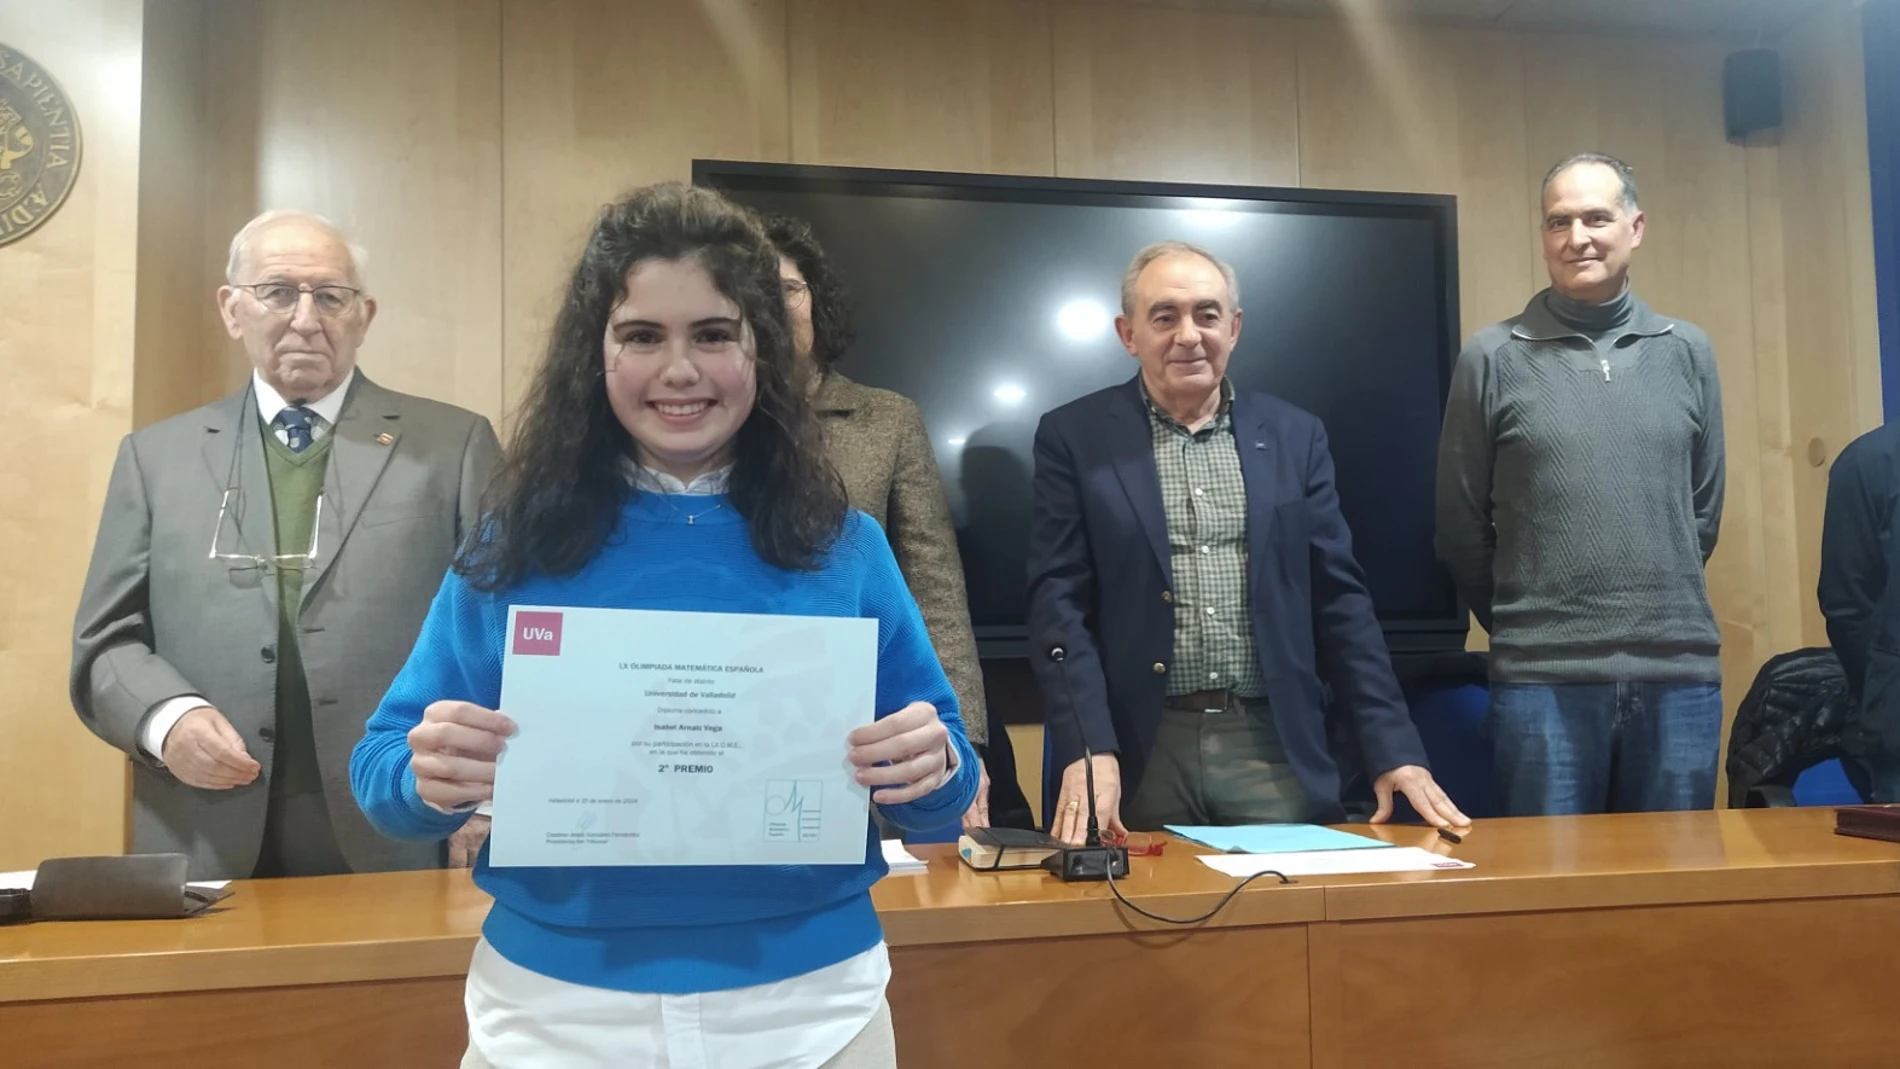 Isabel Arnaiz Vega, ganadora de la fase regional de la Olimpiada Matemática